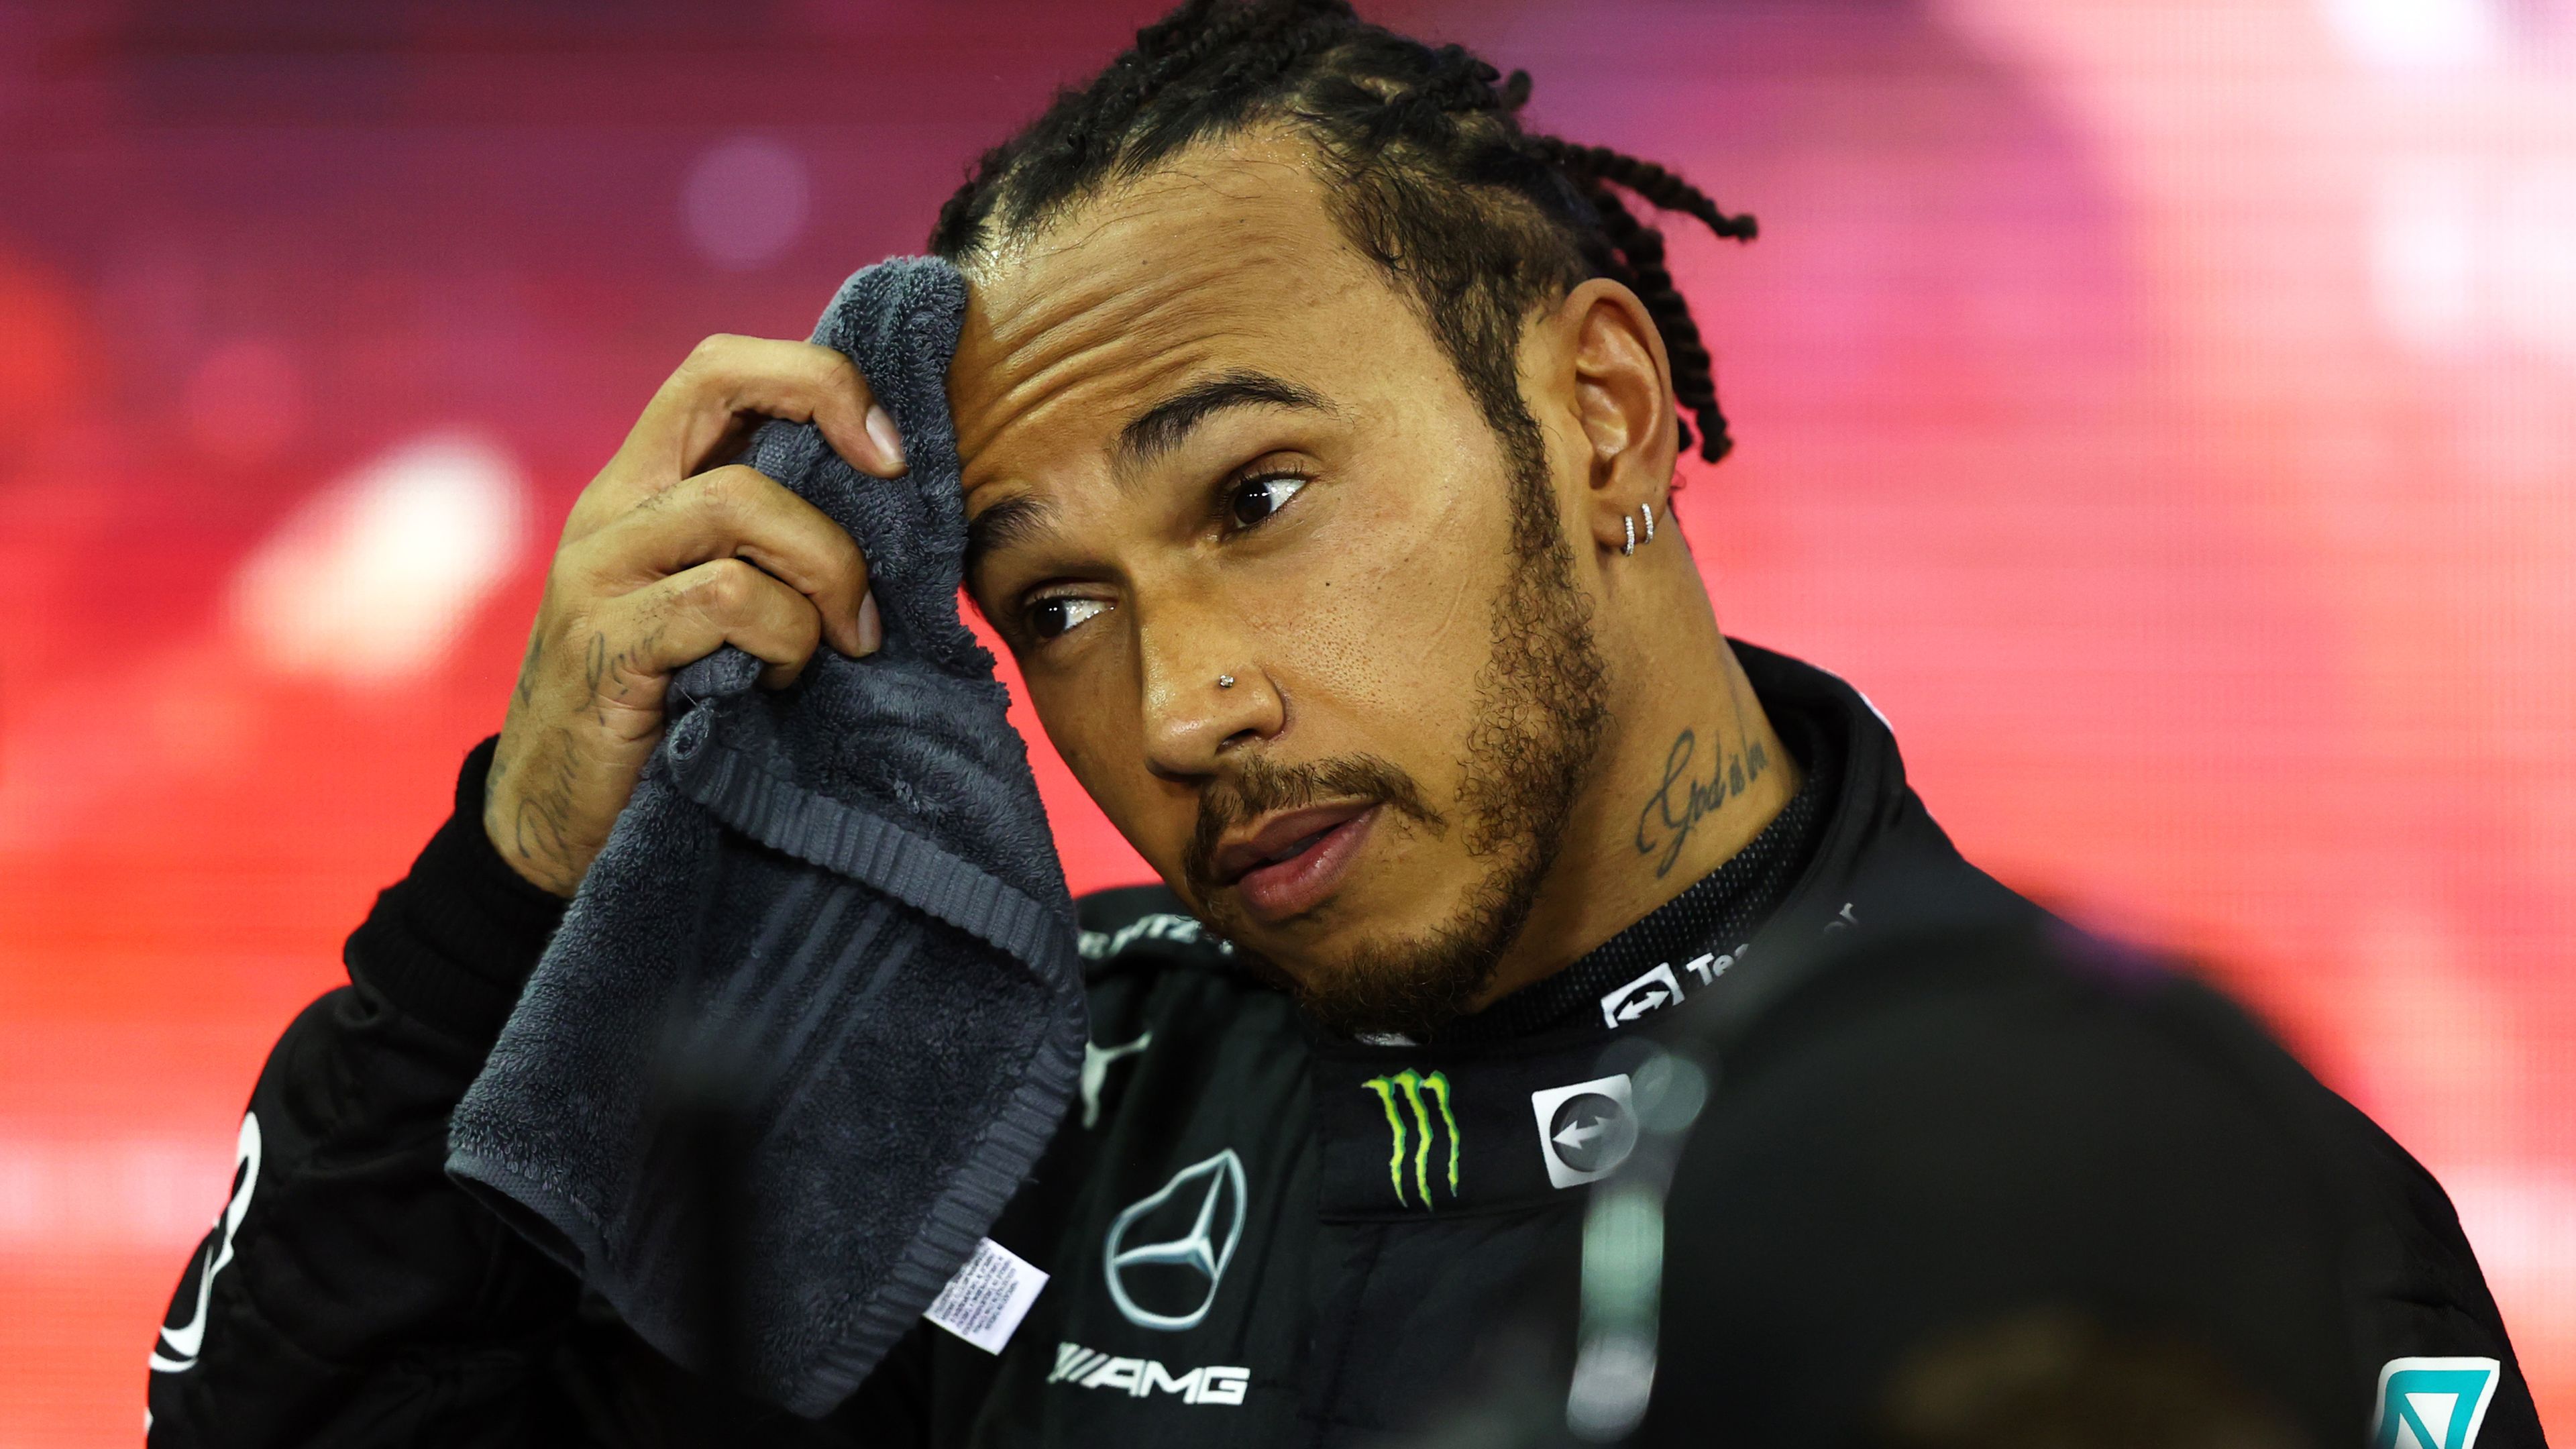 F1 superstar Lewis Hamilton opens up on mental health struggle amid slow start to 2022 season